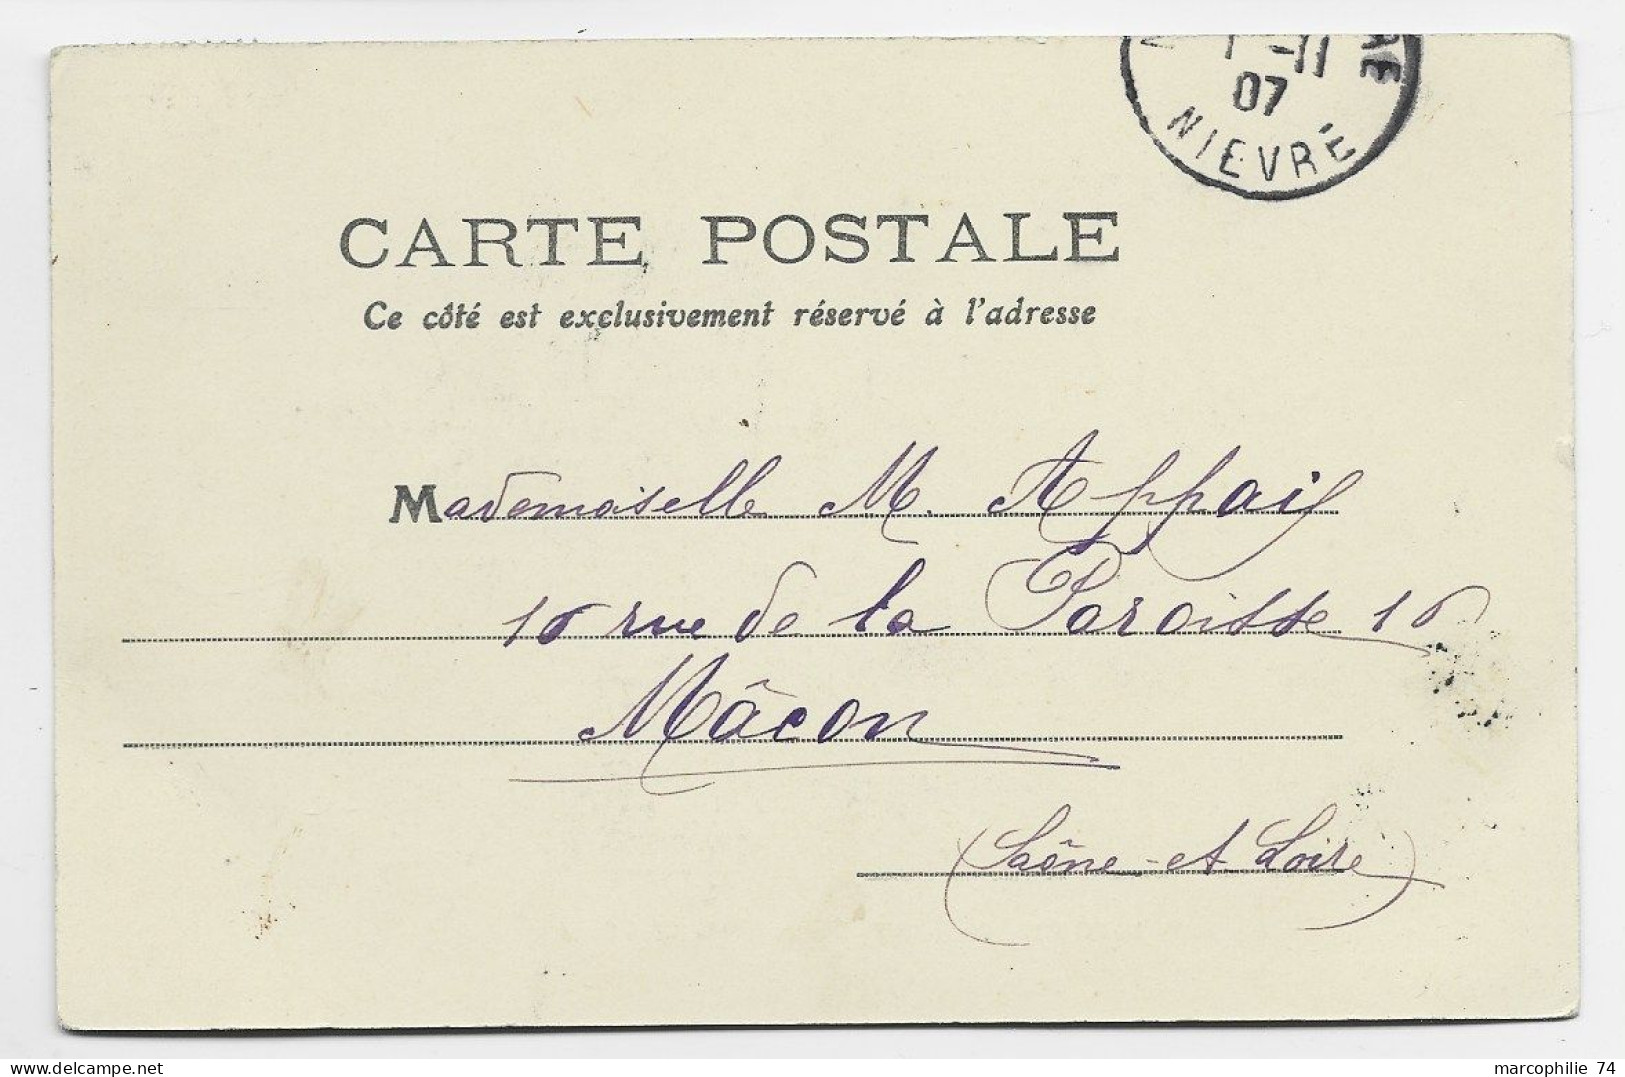 SEMEUSE 5C AU RECTO CARTE TIMBRE A DATE ENTREPOT DE CERGY LA TOUR 1 NOV 1907 NIEVRE RARE - Railway Post